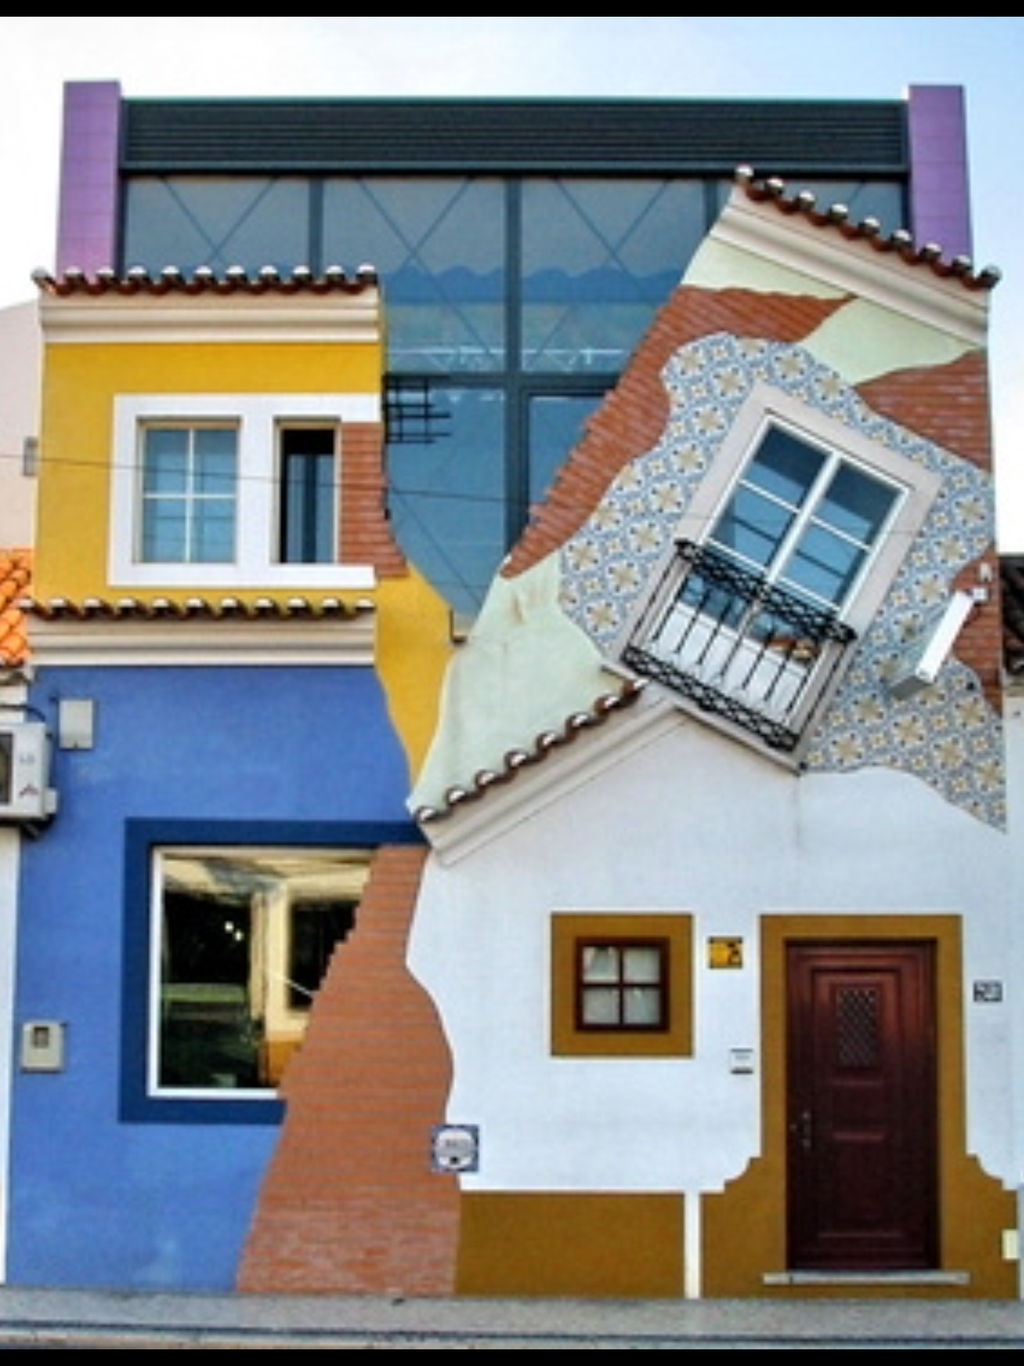 Strange House in Chamusca ( Portugal ) .